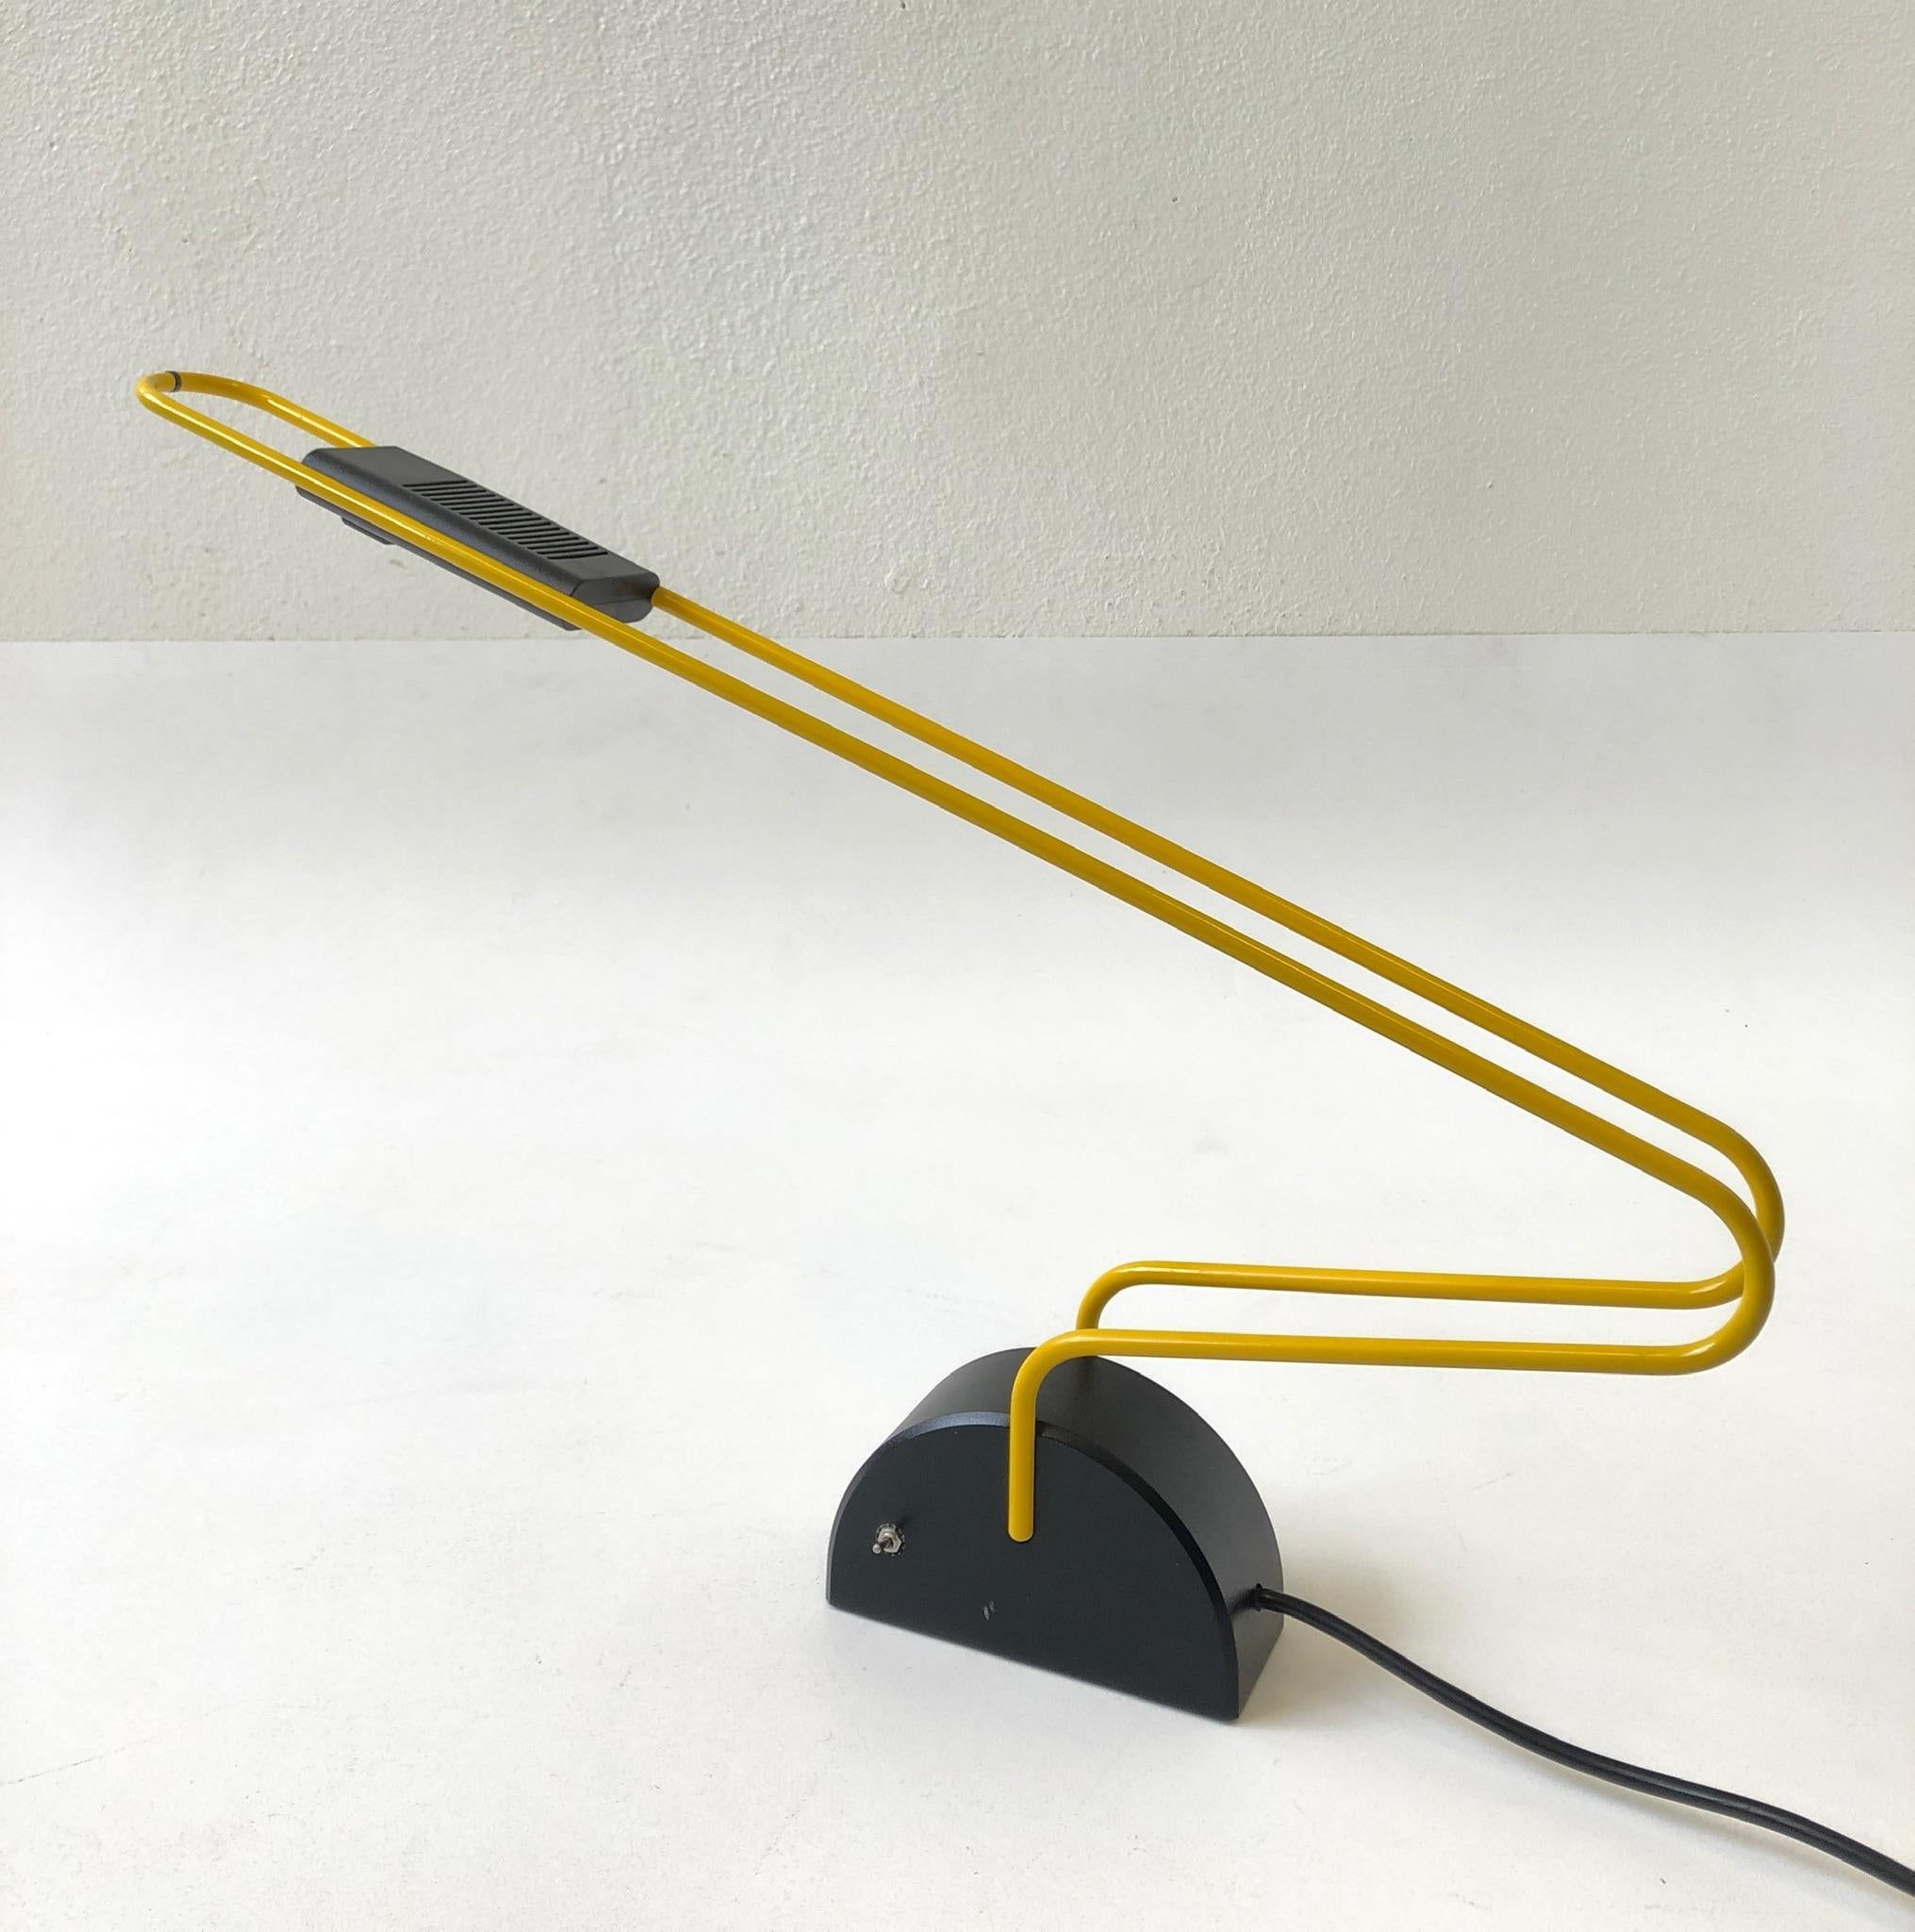 post modern lamp